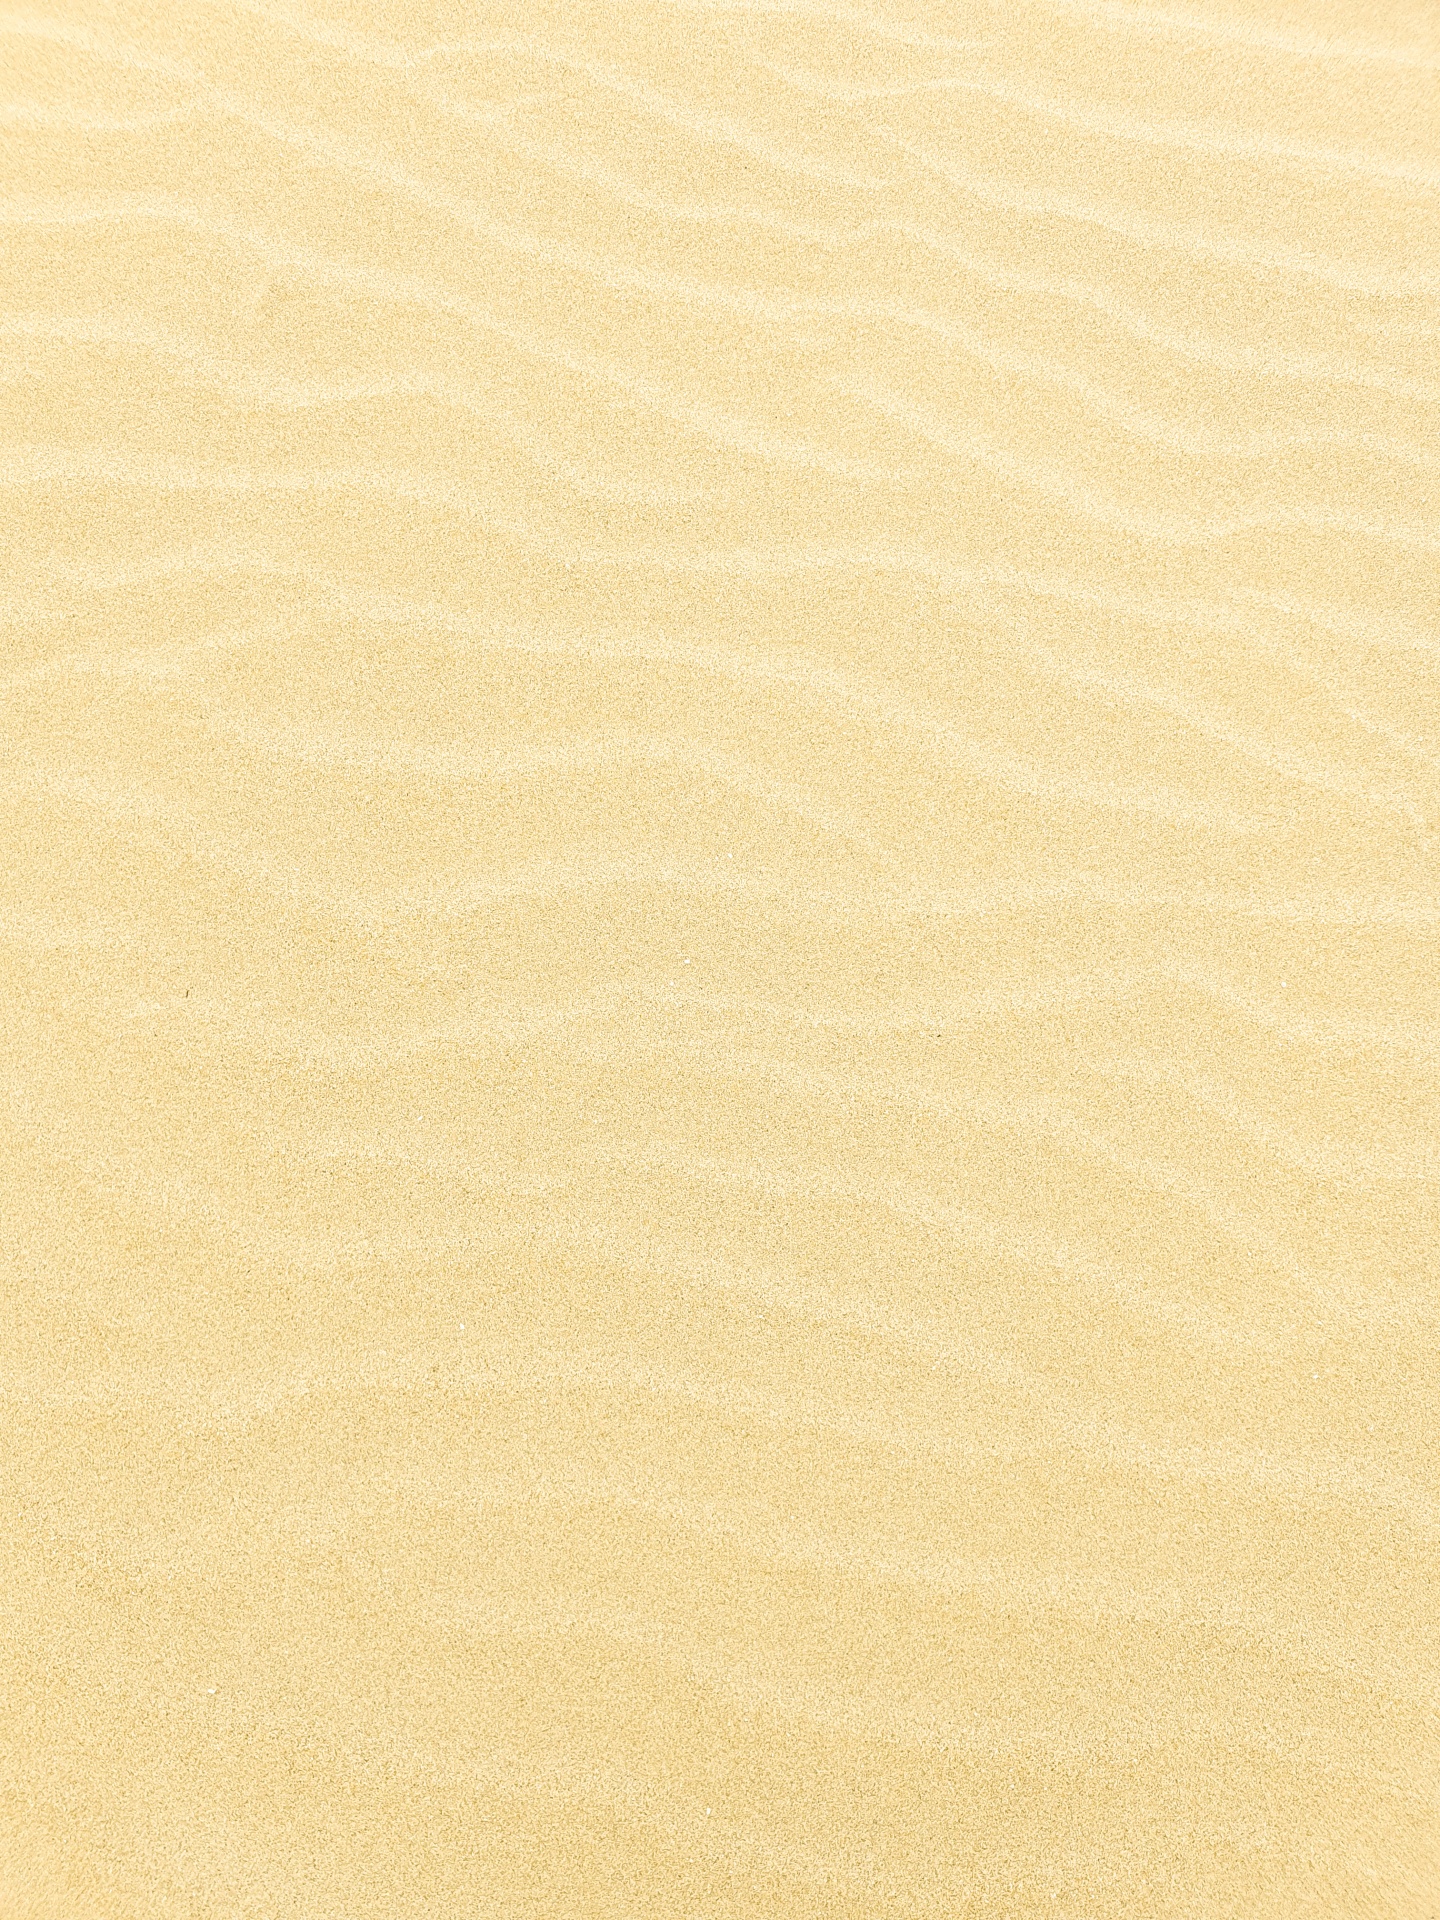 Yellow Sand Background